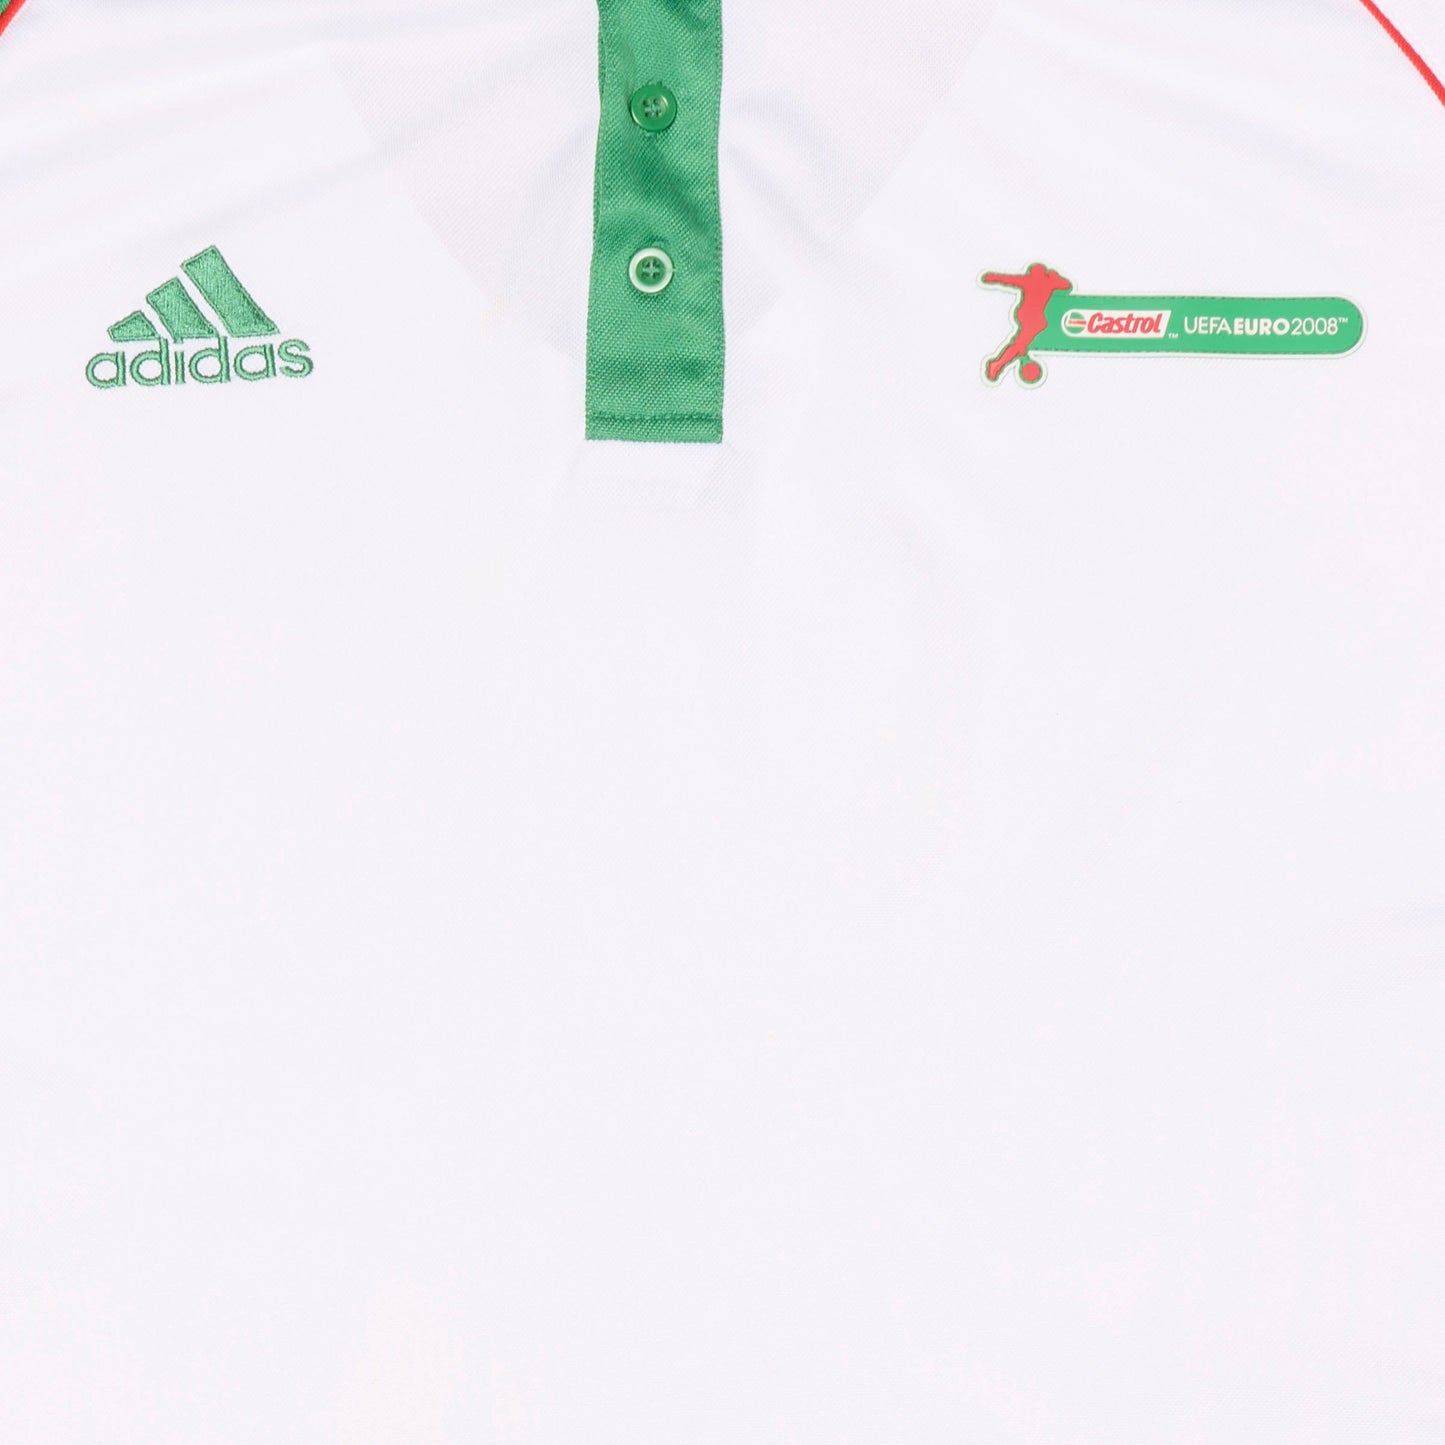 Adidas Castol Logo Collared Sports Shirt - S